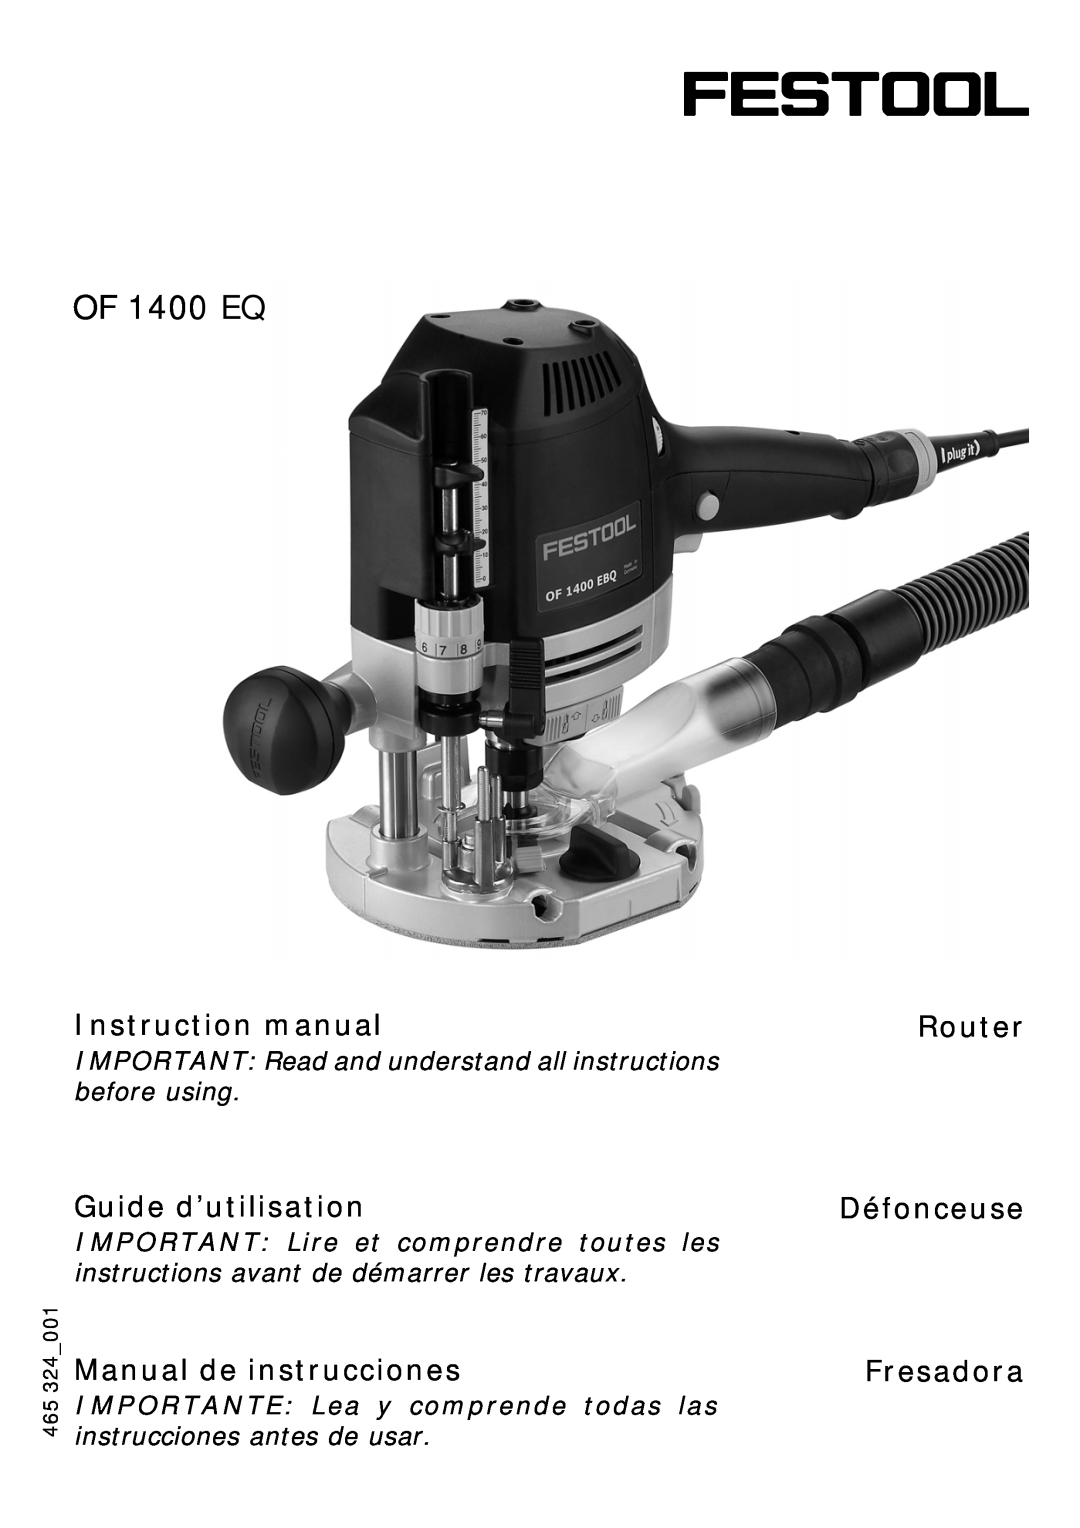 Festool instruction manual OF 1400 EQ, Instruction manual, Guide d’utilisation, Manual de instrucciones 